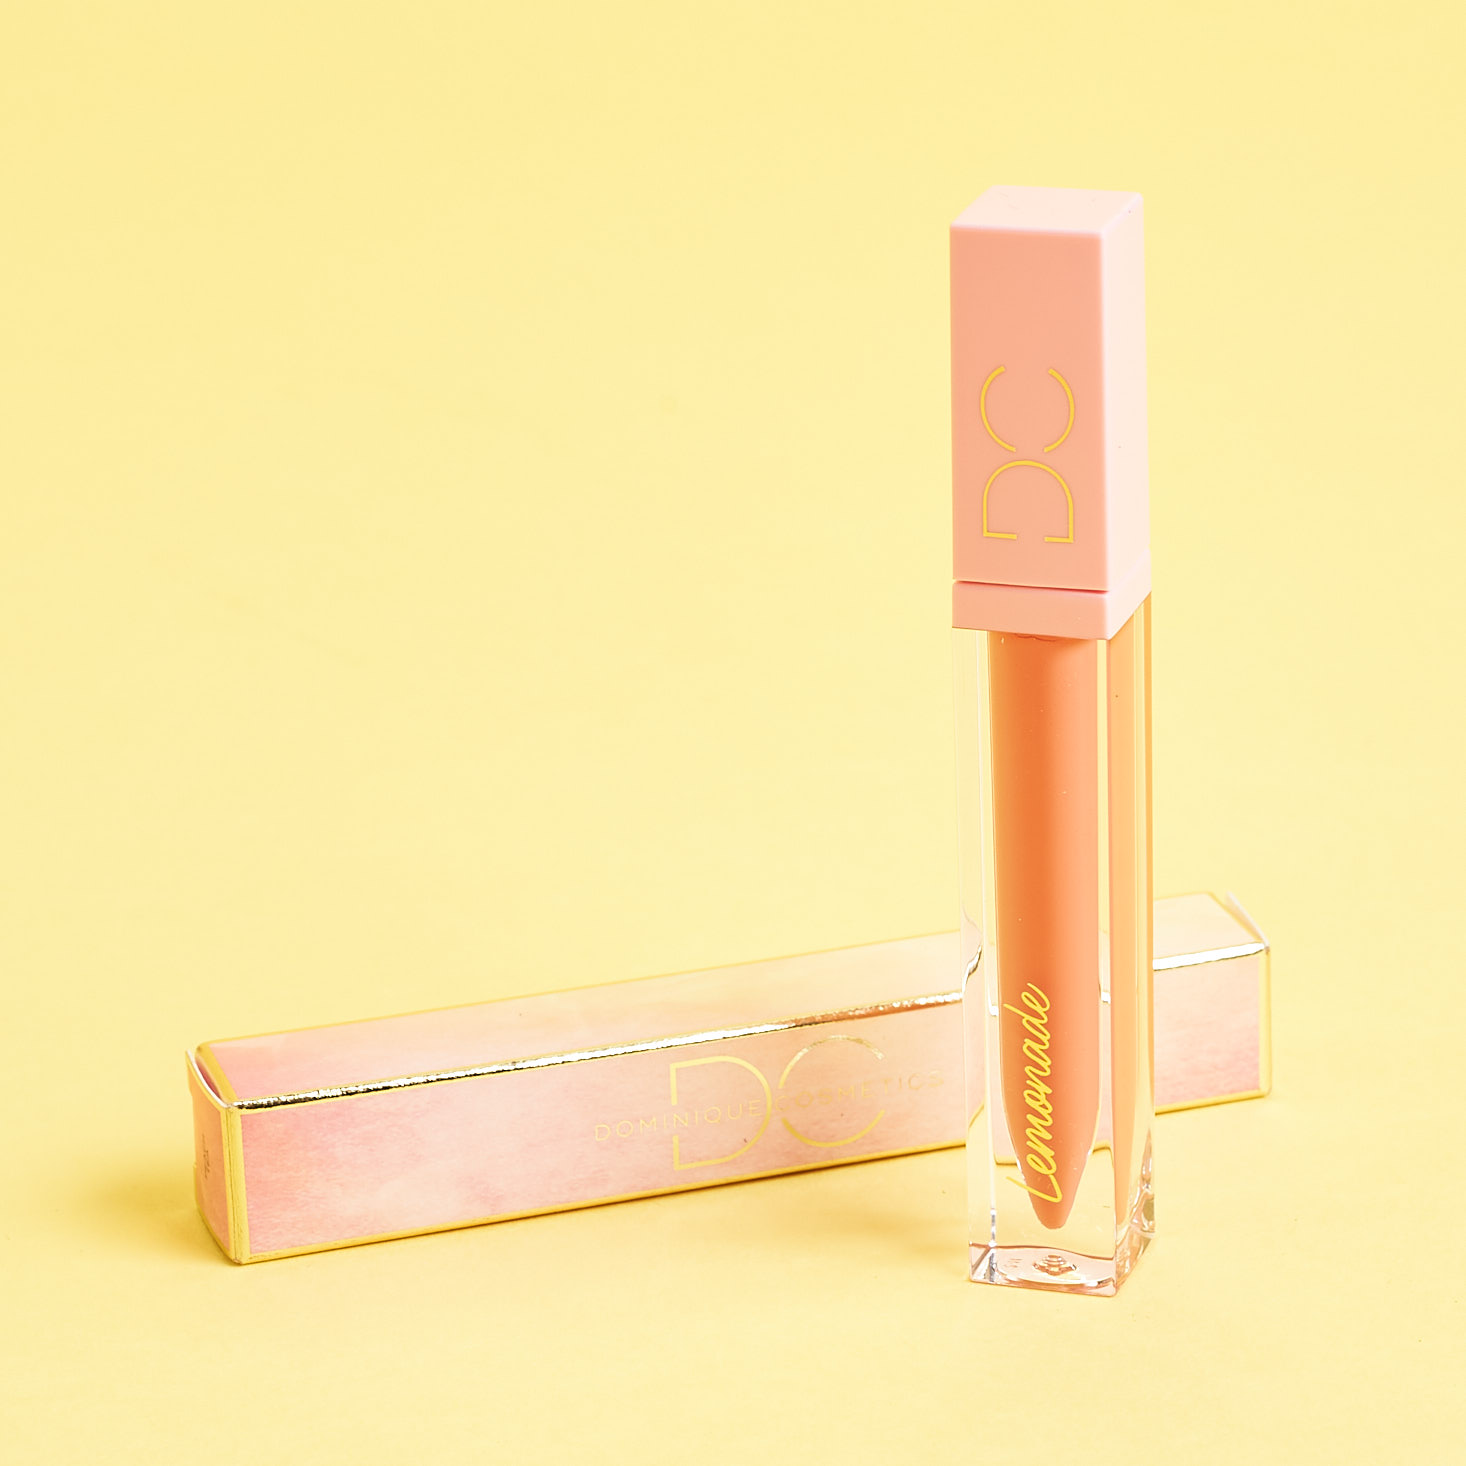 Boxy Charm June 2019 beauty subscription box review lemonade lipgloss